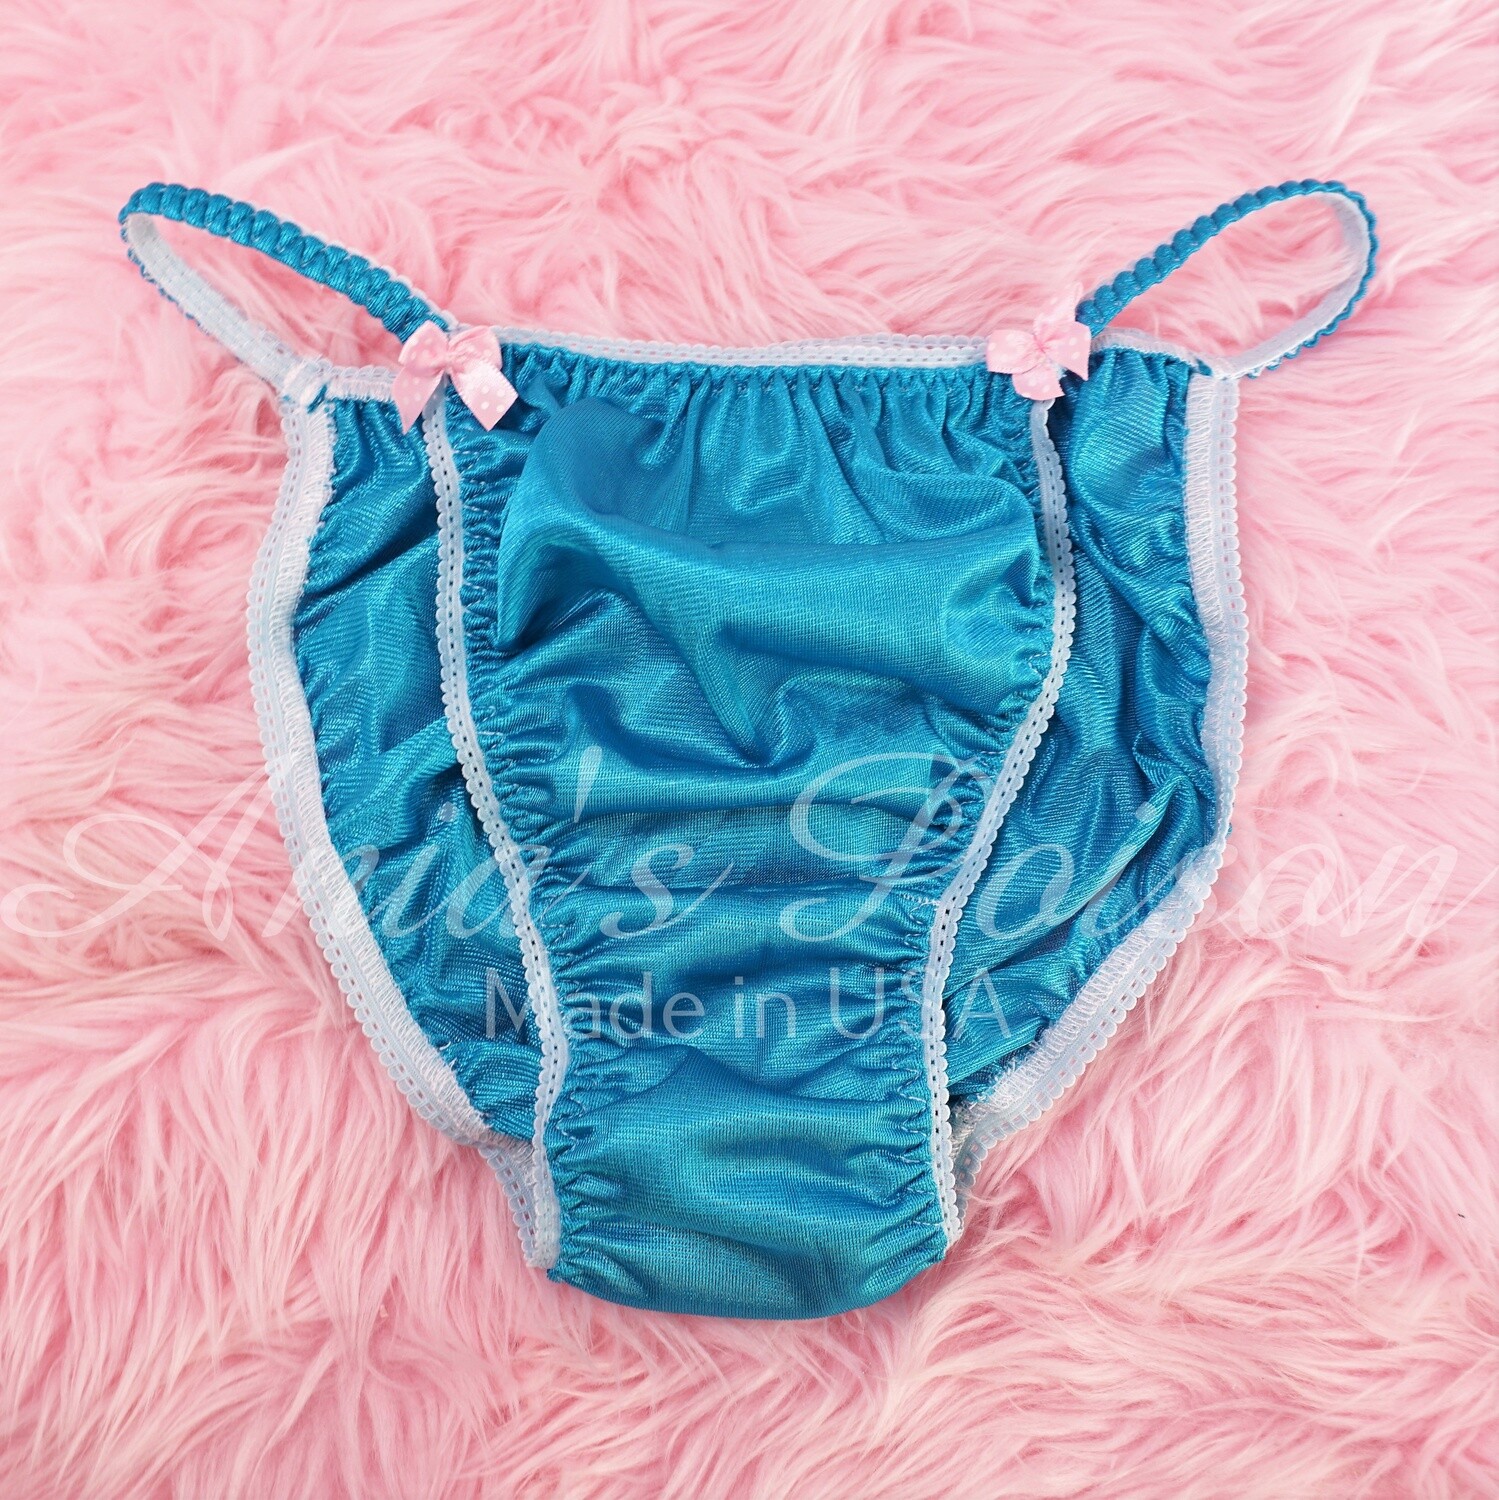 SALE Nylon Chiffon Ania's Poison MANties Rare Vintage Style Turquoise Blue string bikini soft Sissy panties for men sz M L XL FLASH SALE